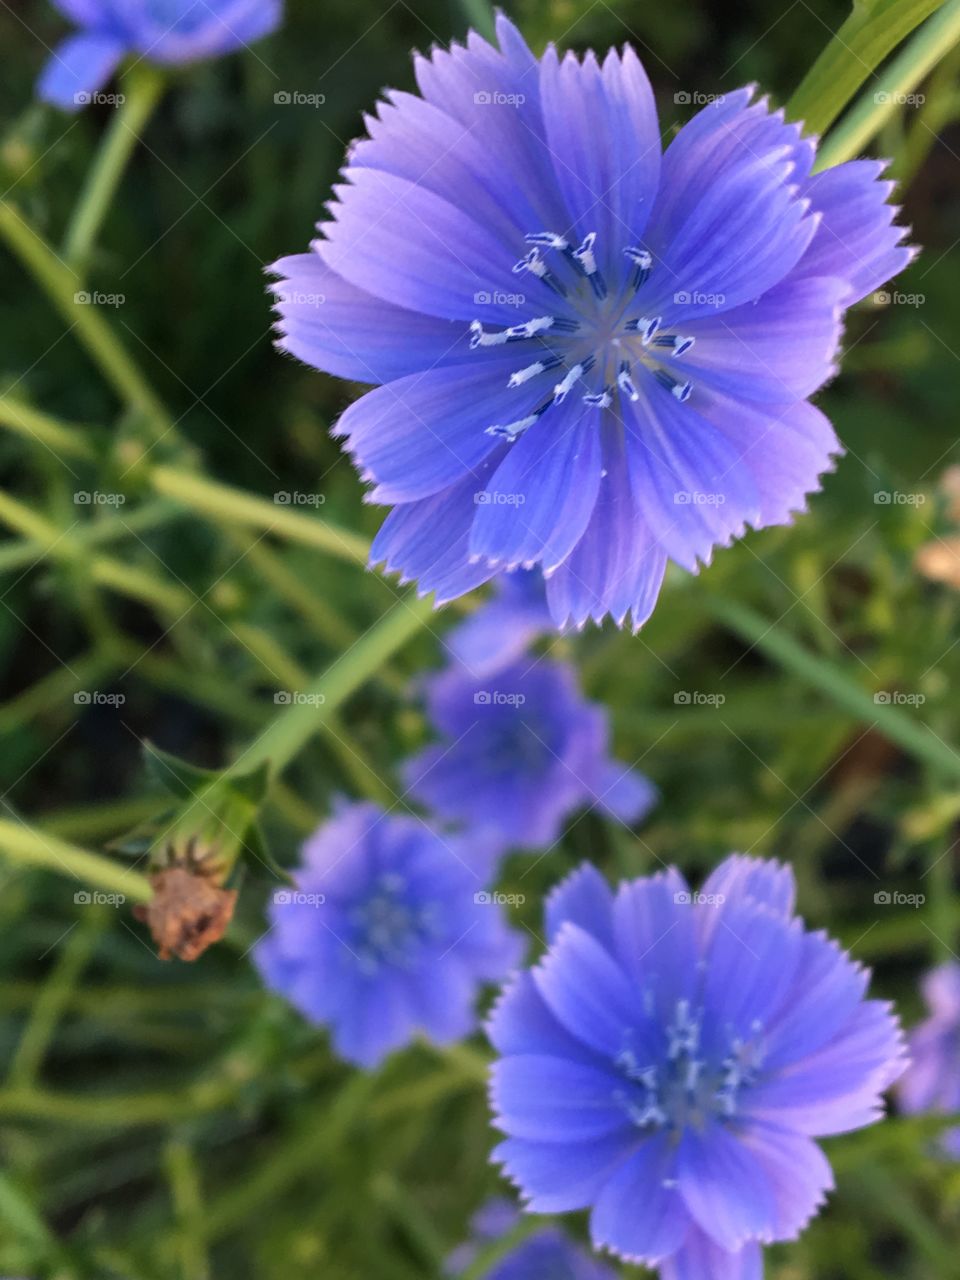 Some wonderful small purple flowers in my garden